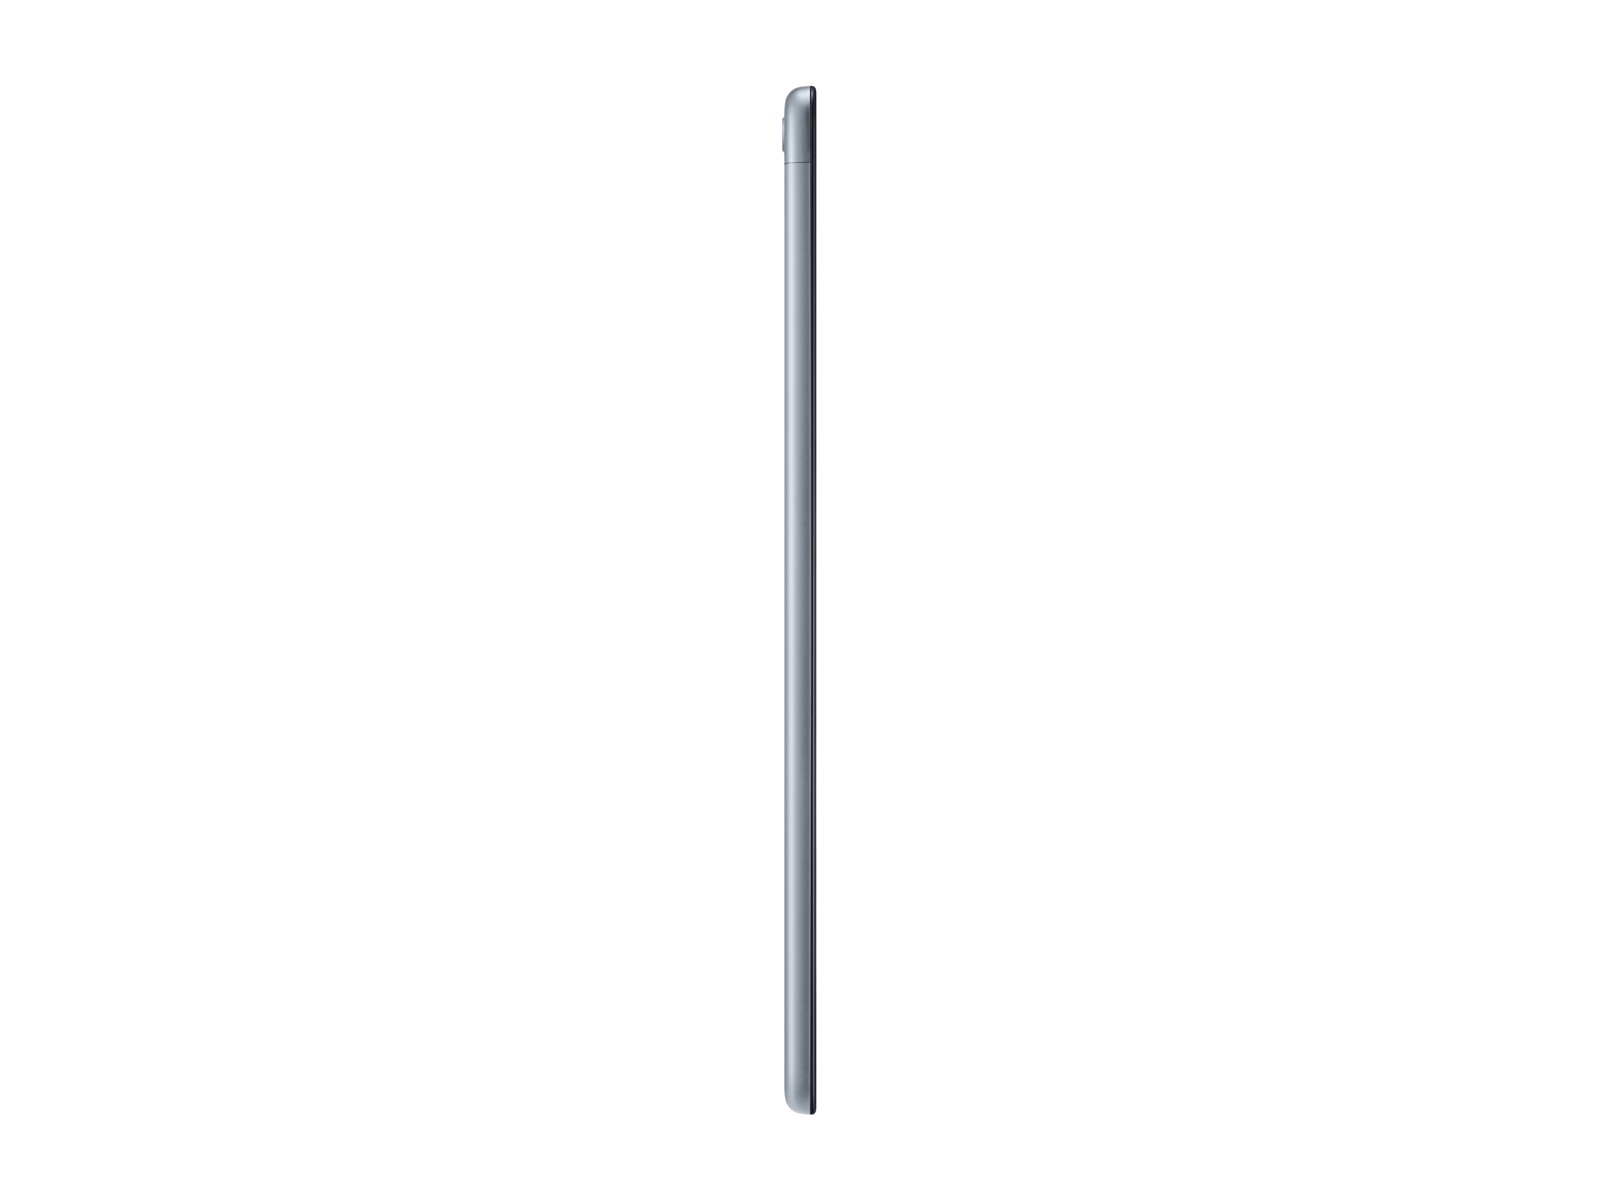 Thumbnail image of Galaxy Tab A 10.1 (2019), 32GB, Silver (Sprint)